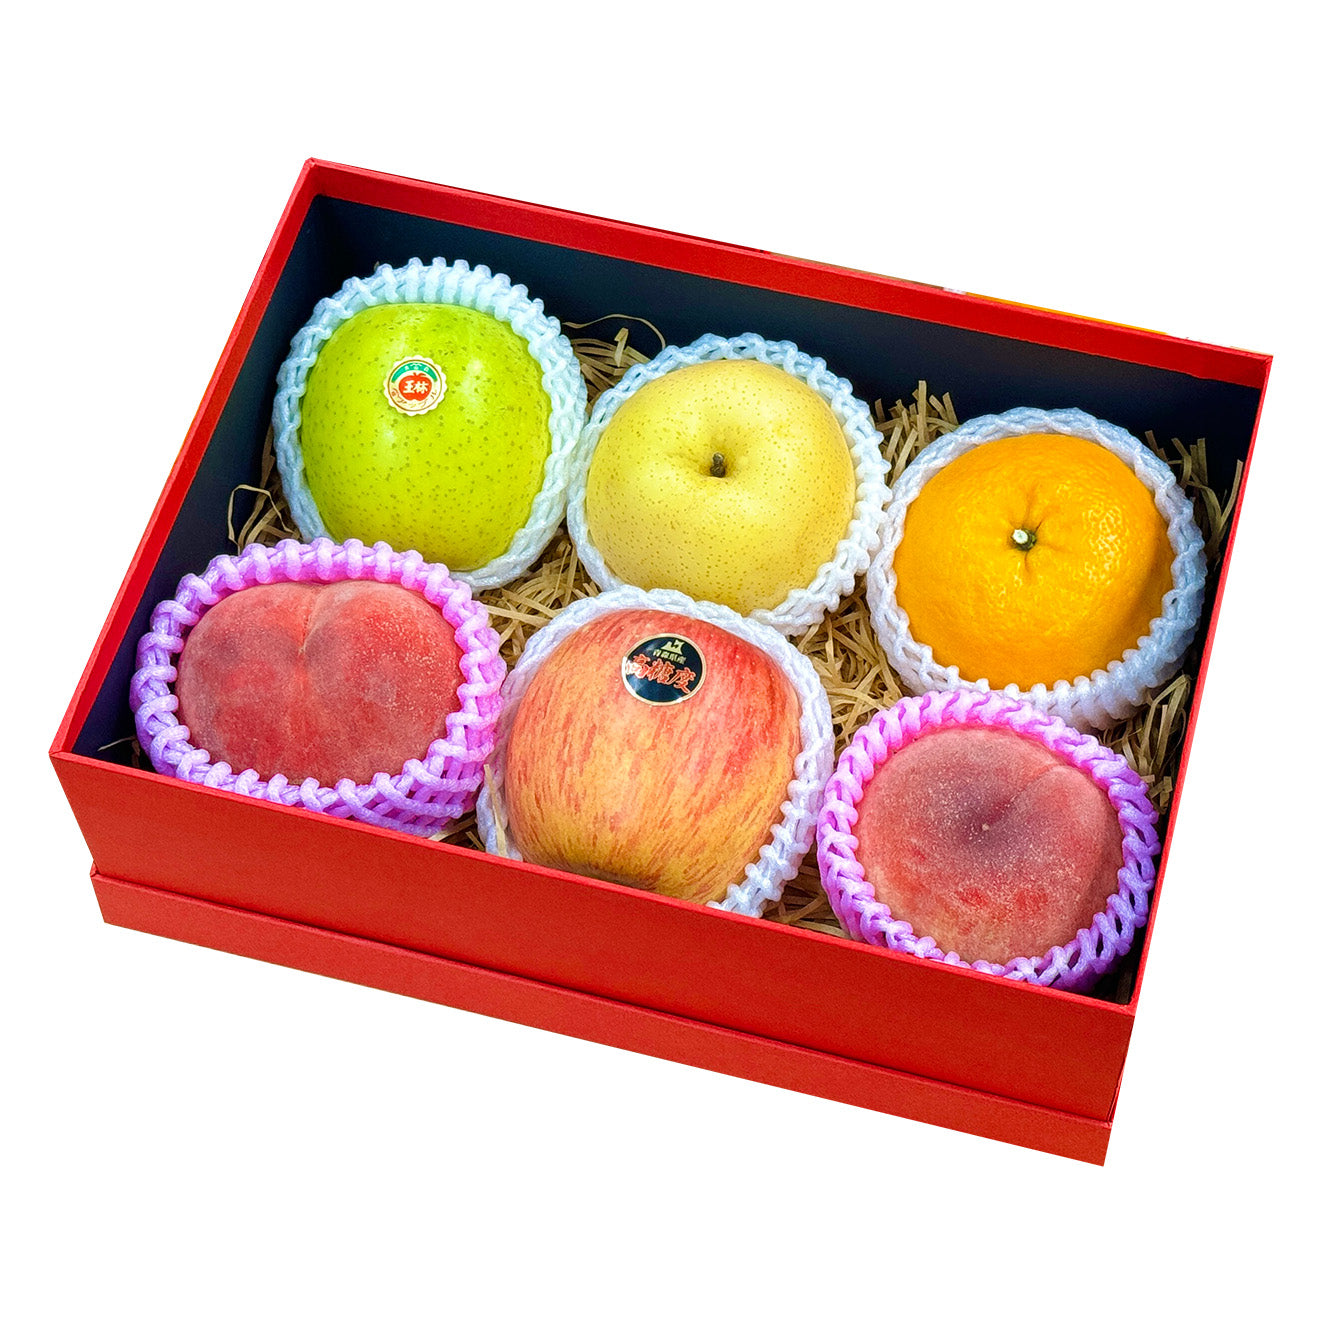 MAF2414 Mid-Autumn Festival Fruit Box